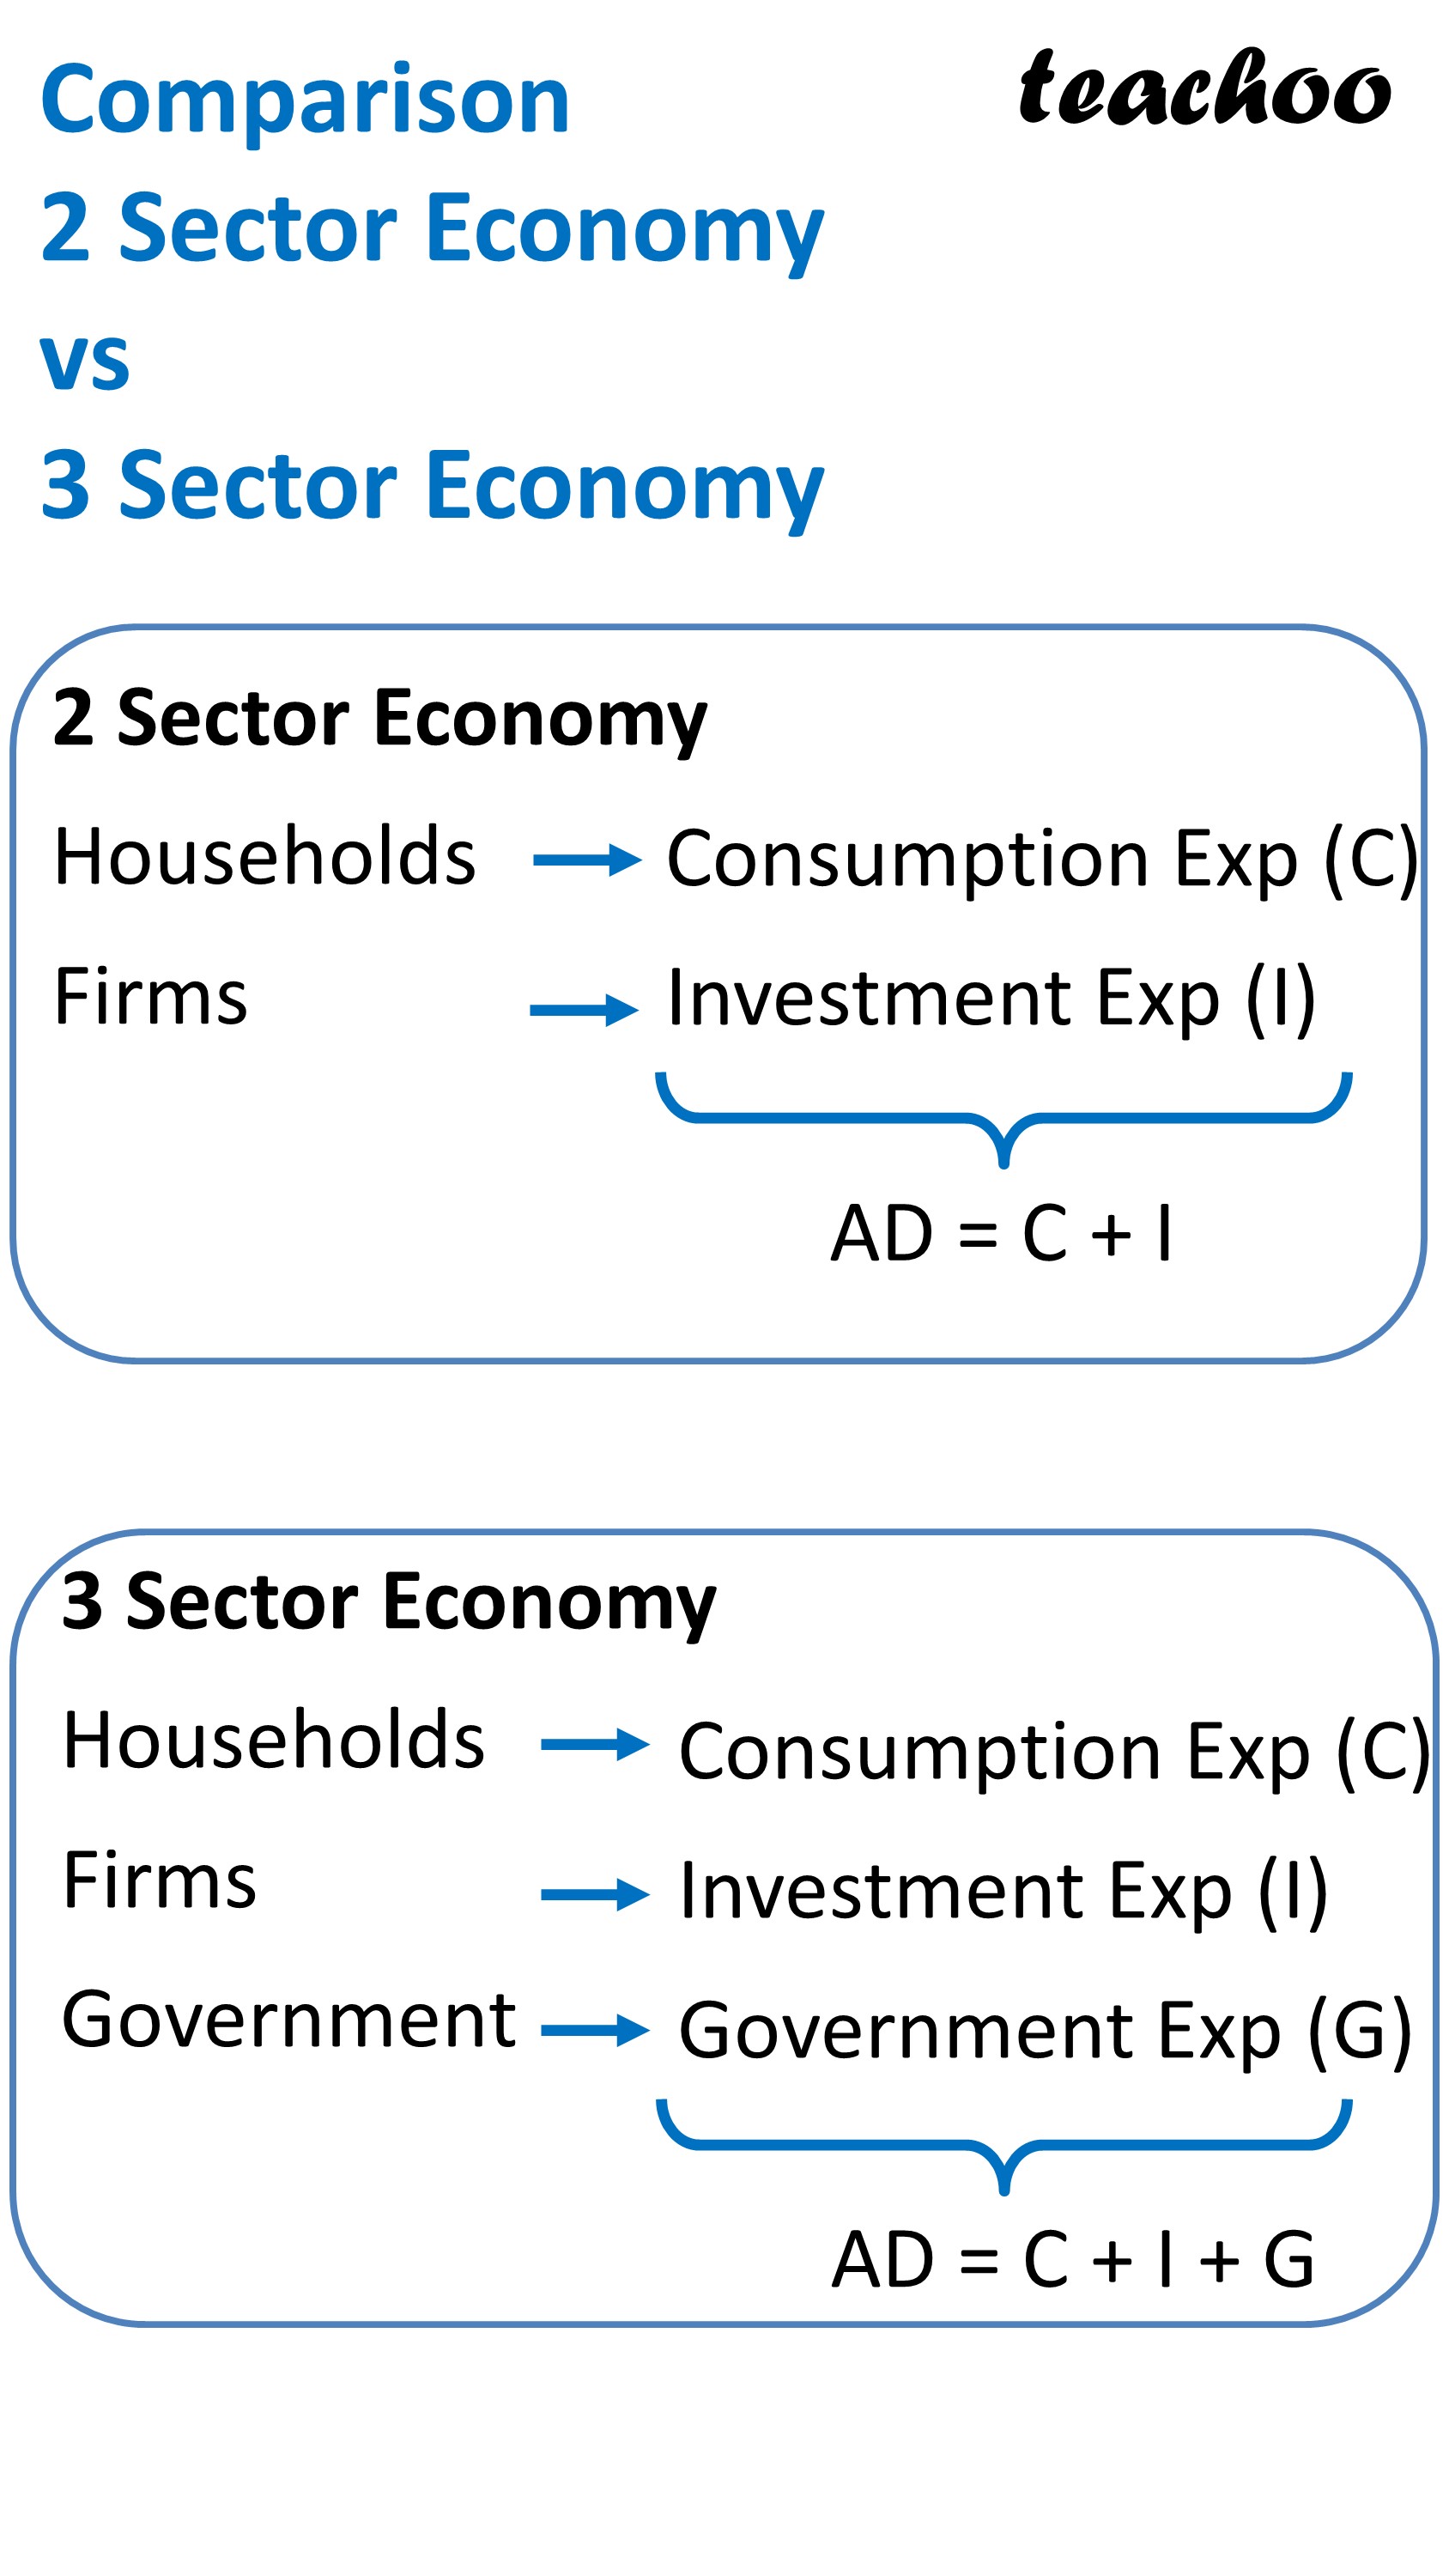 Comparison 2 Sector Economy vs 3 Sector Economy - Teachoo.JPG